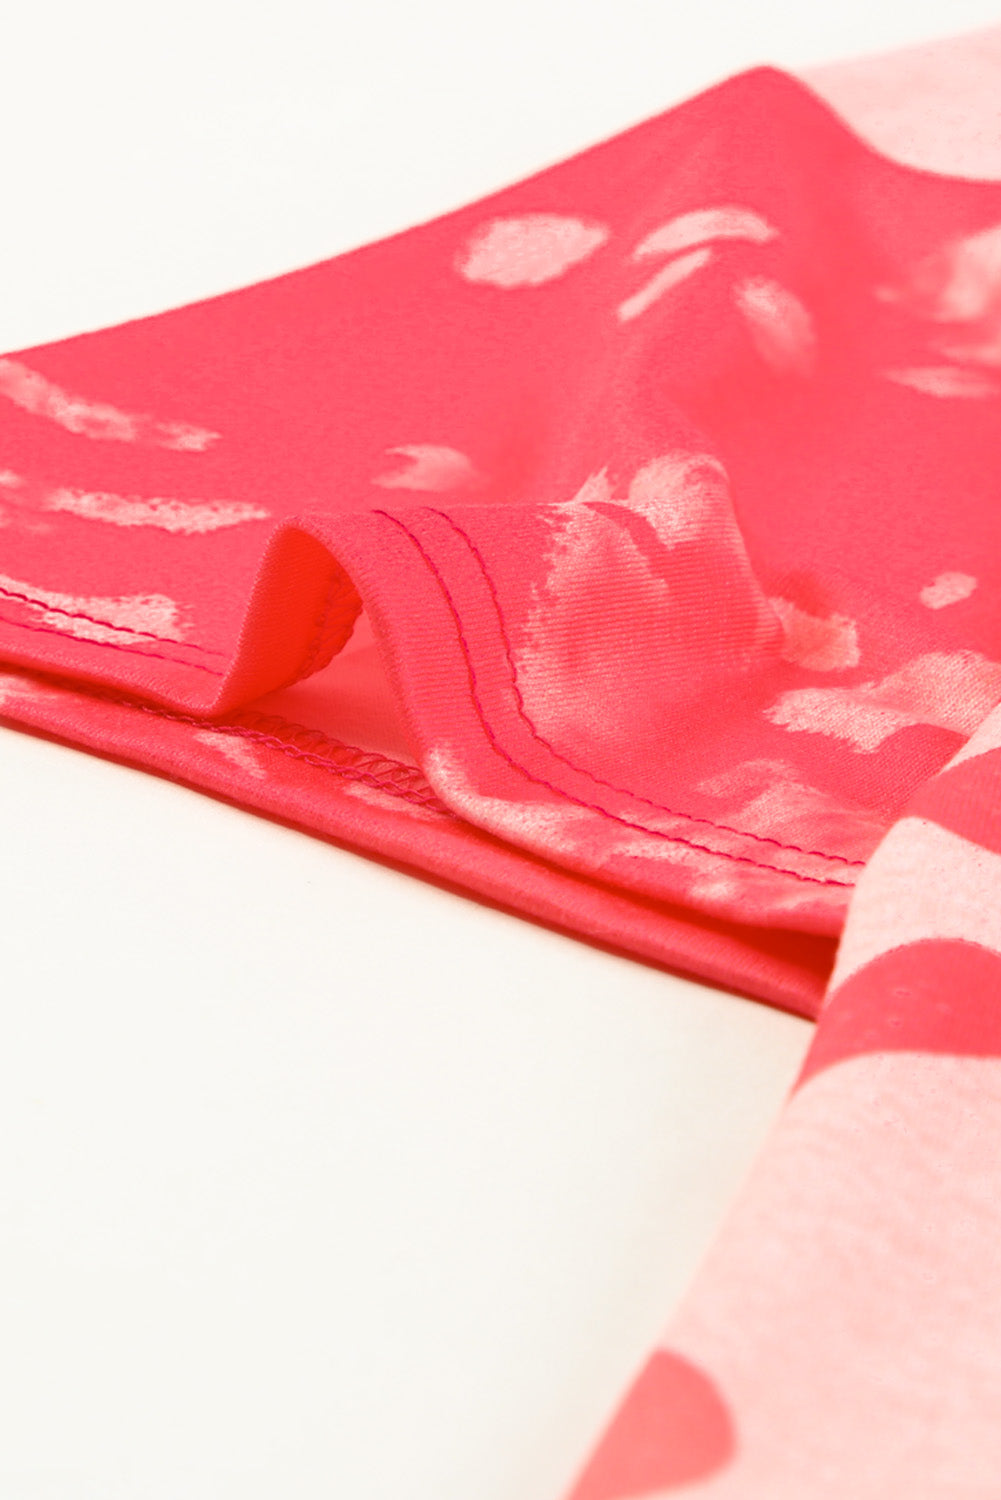 T-shirt Boyfriend blanchi léopard rose avec trous